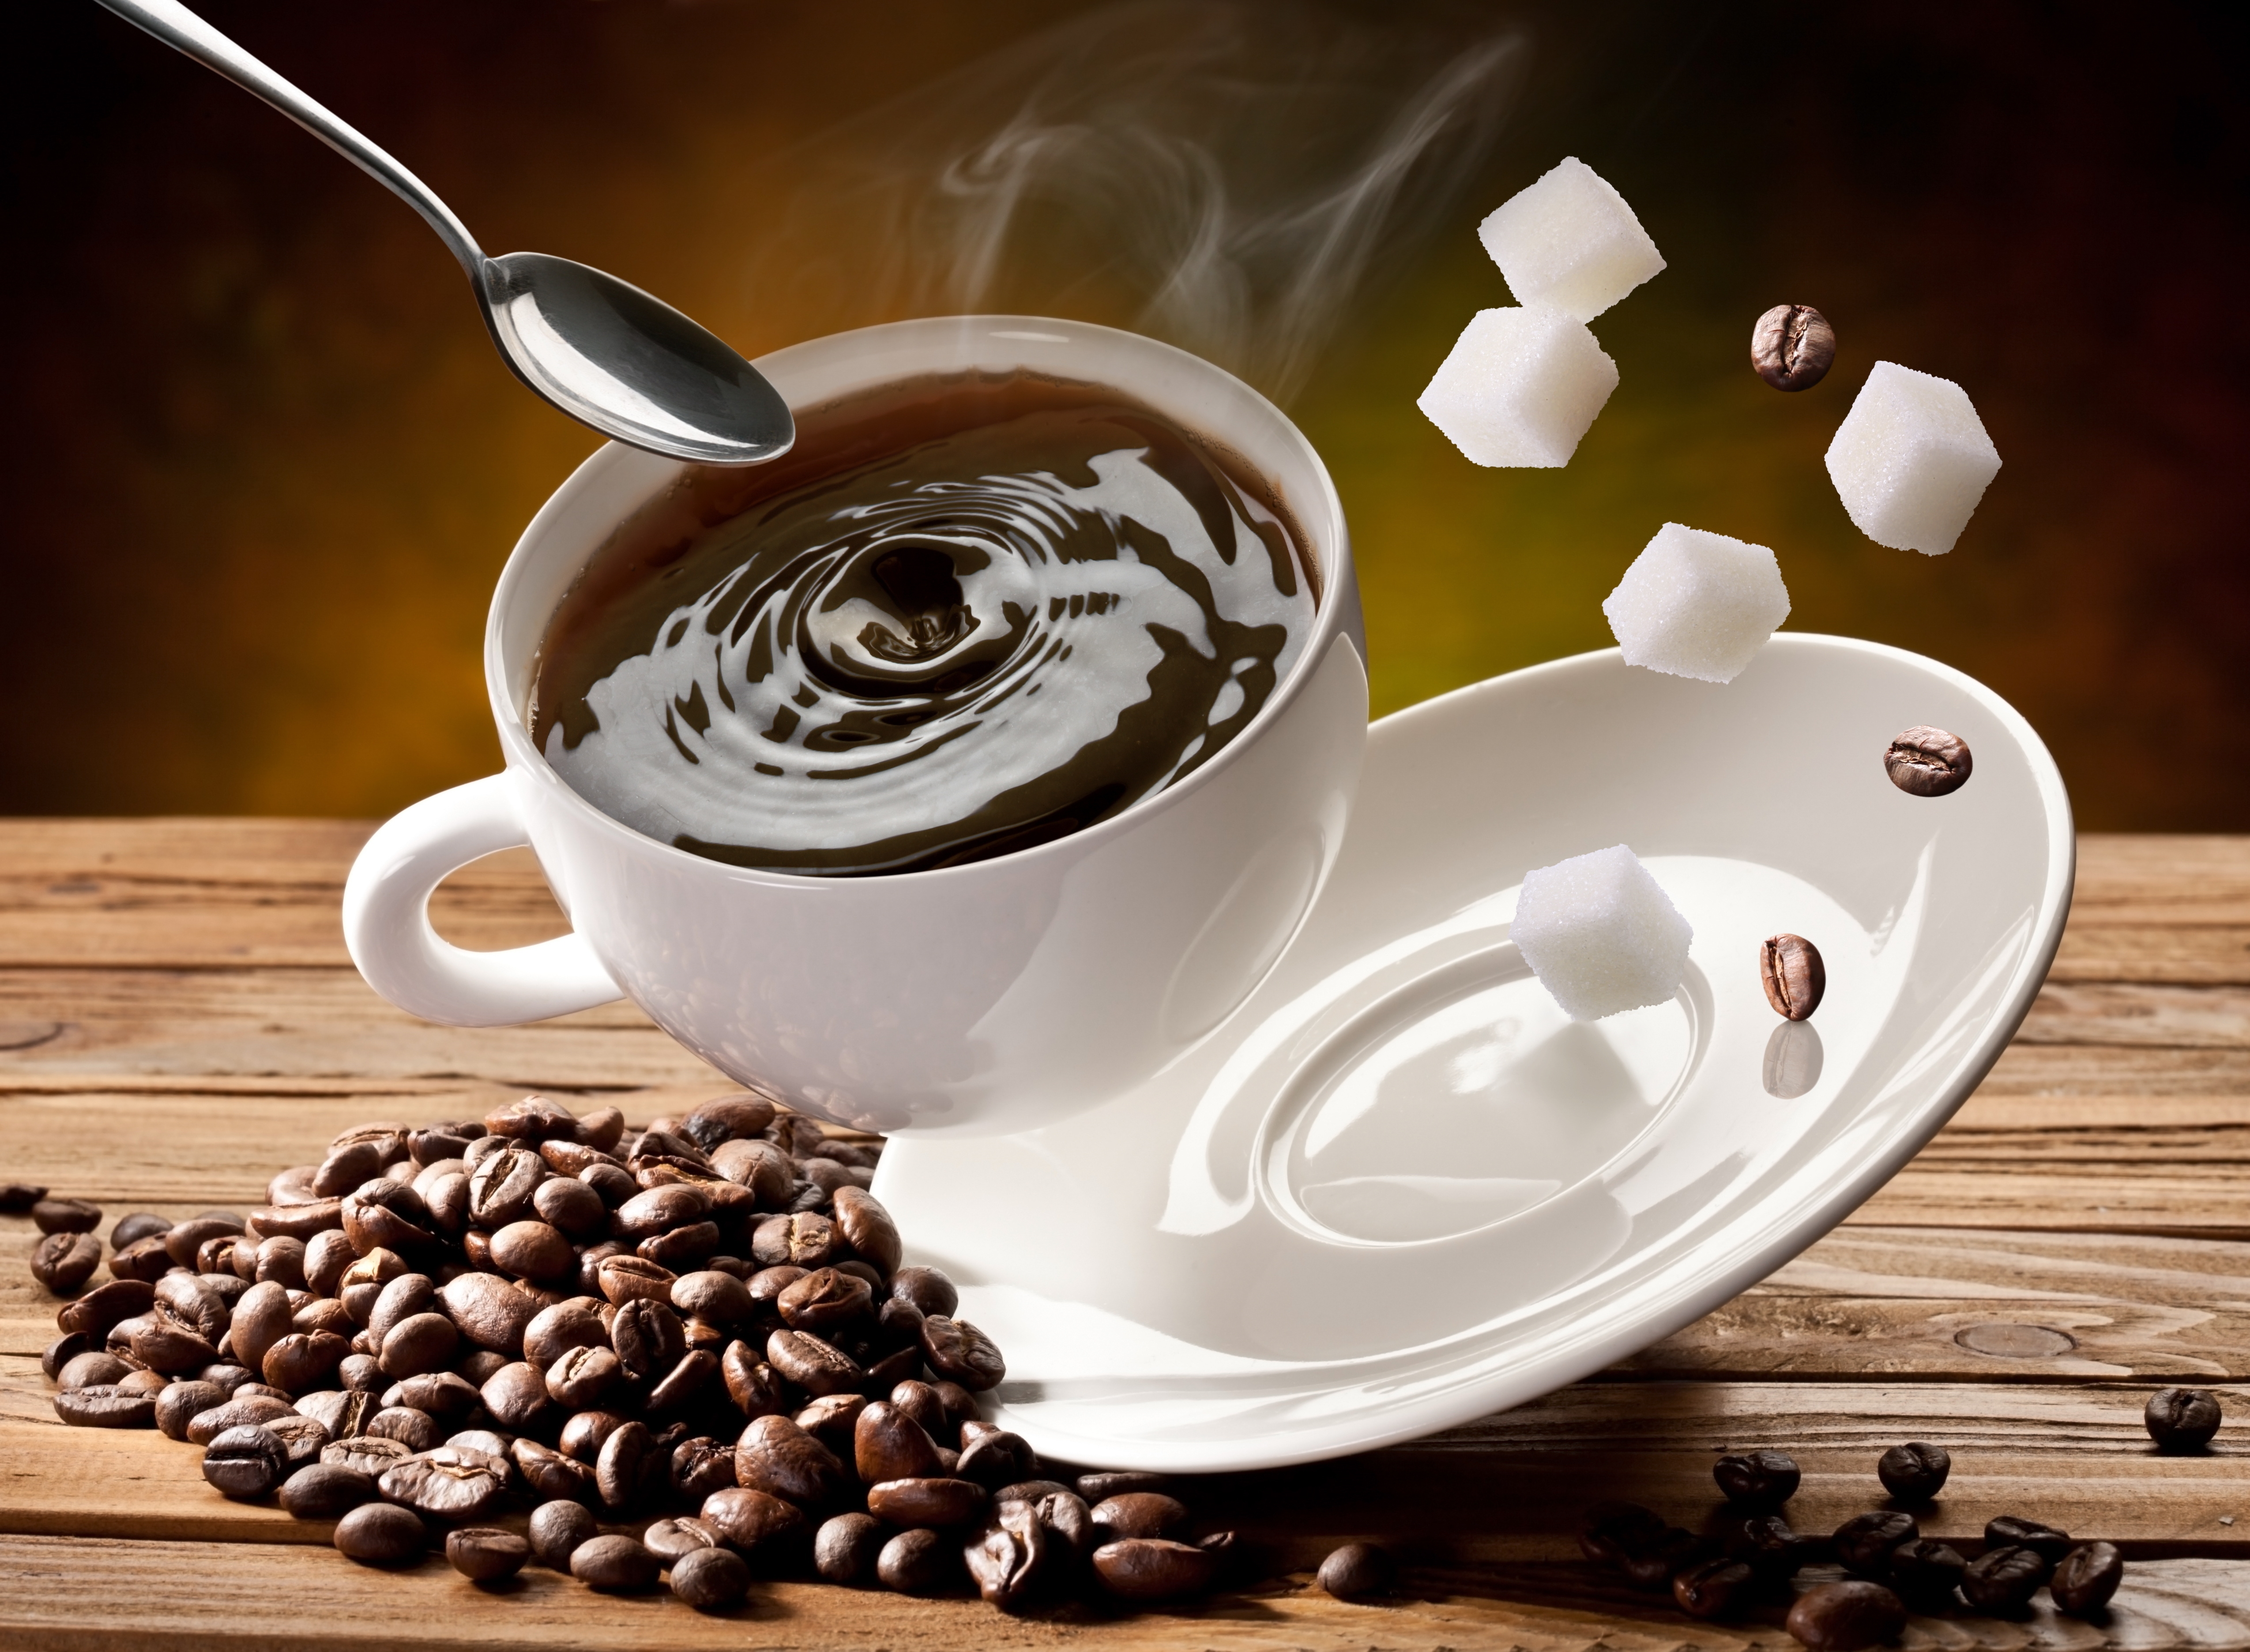 Download Coffee Cup Wallpaper Backgrounds - WallpaperSafari